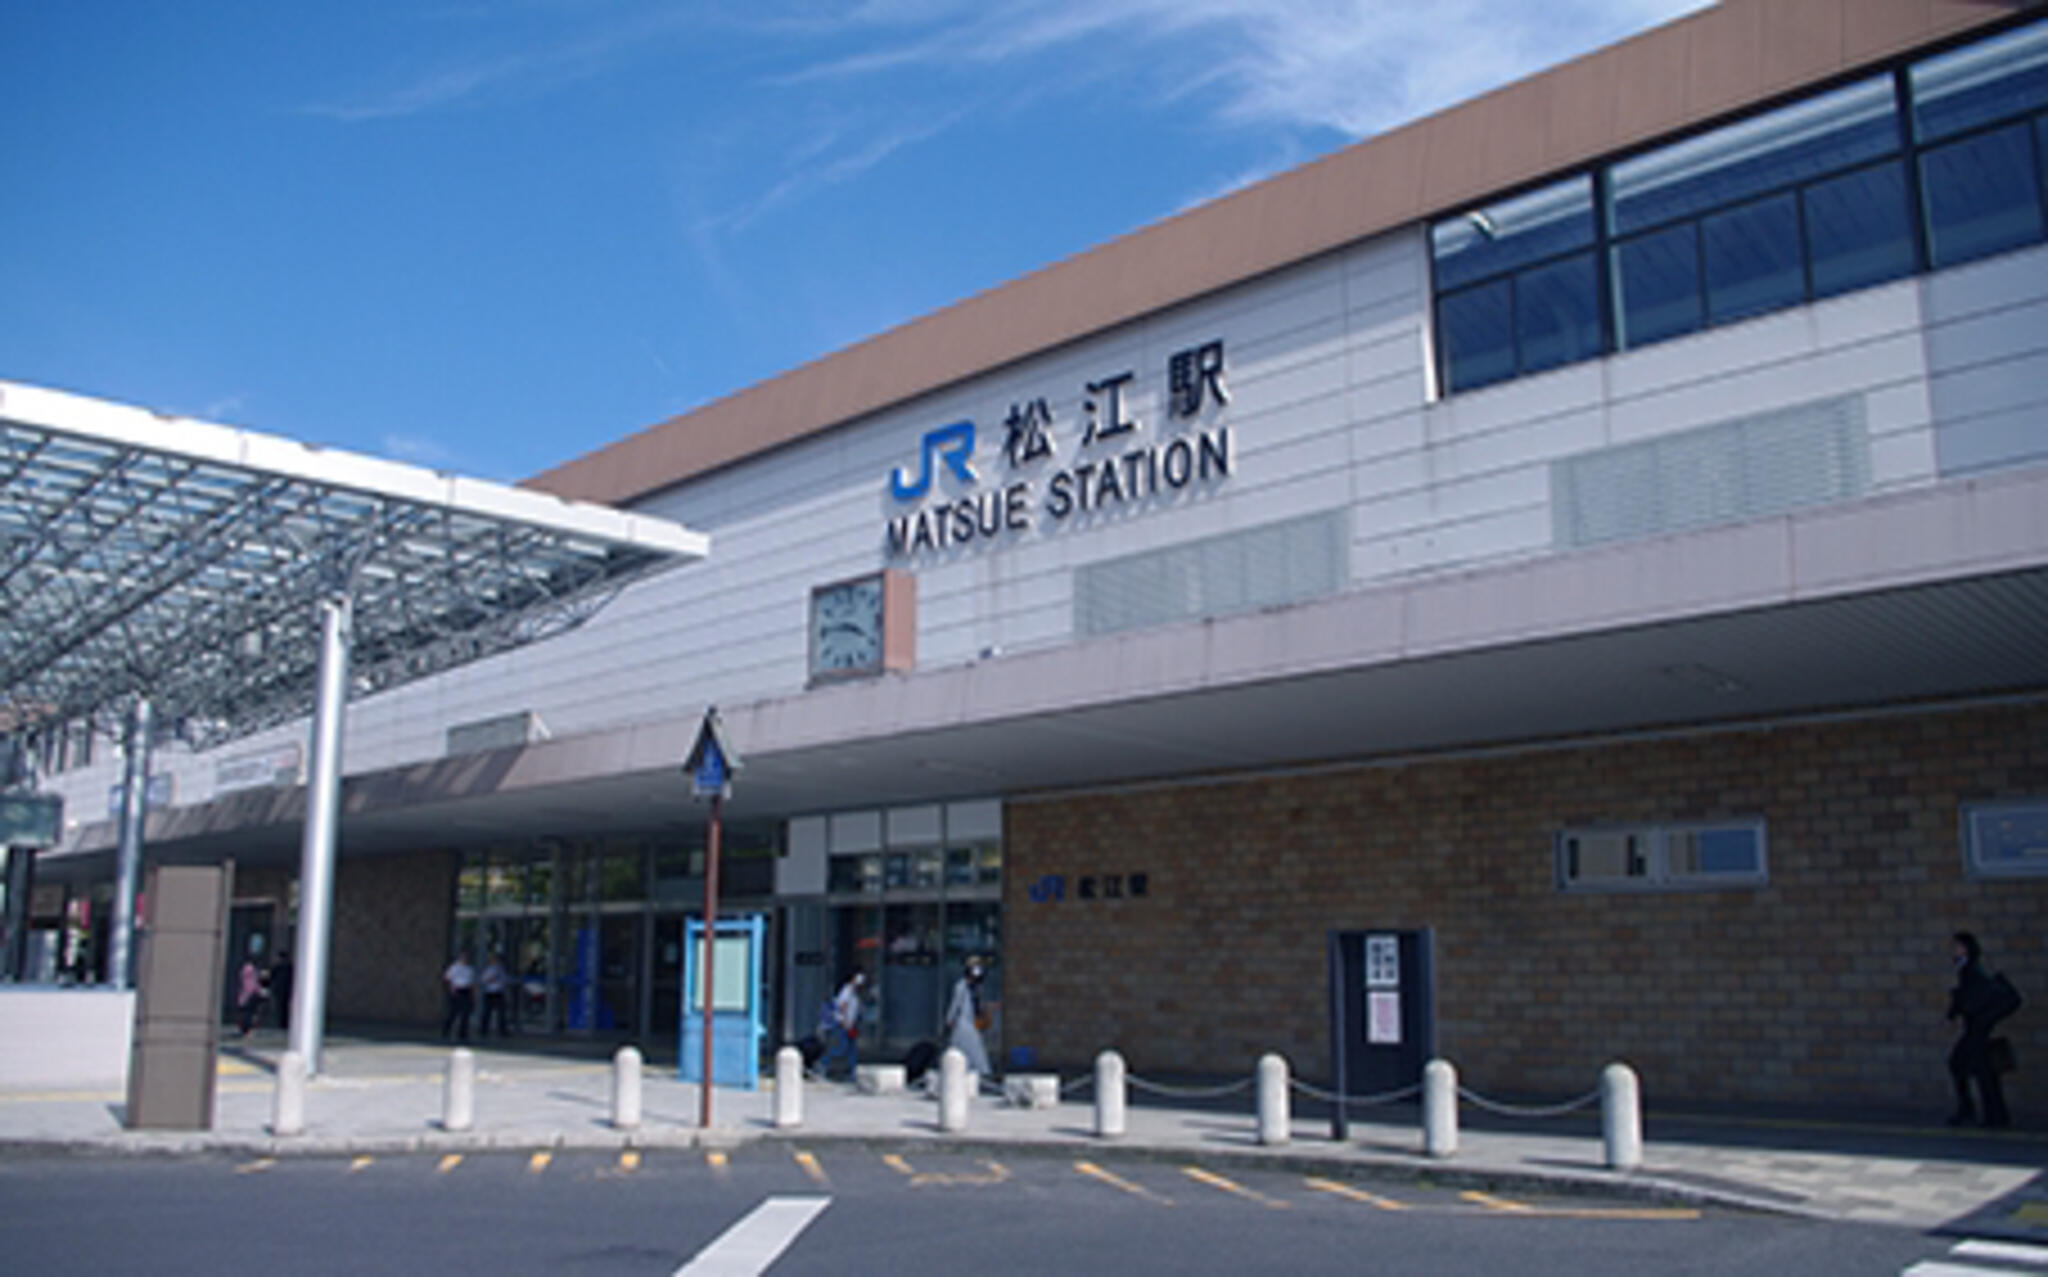 松江駅の代表写真9